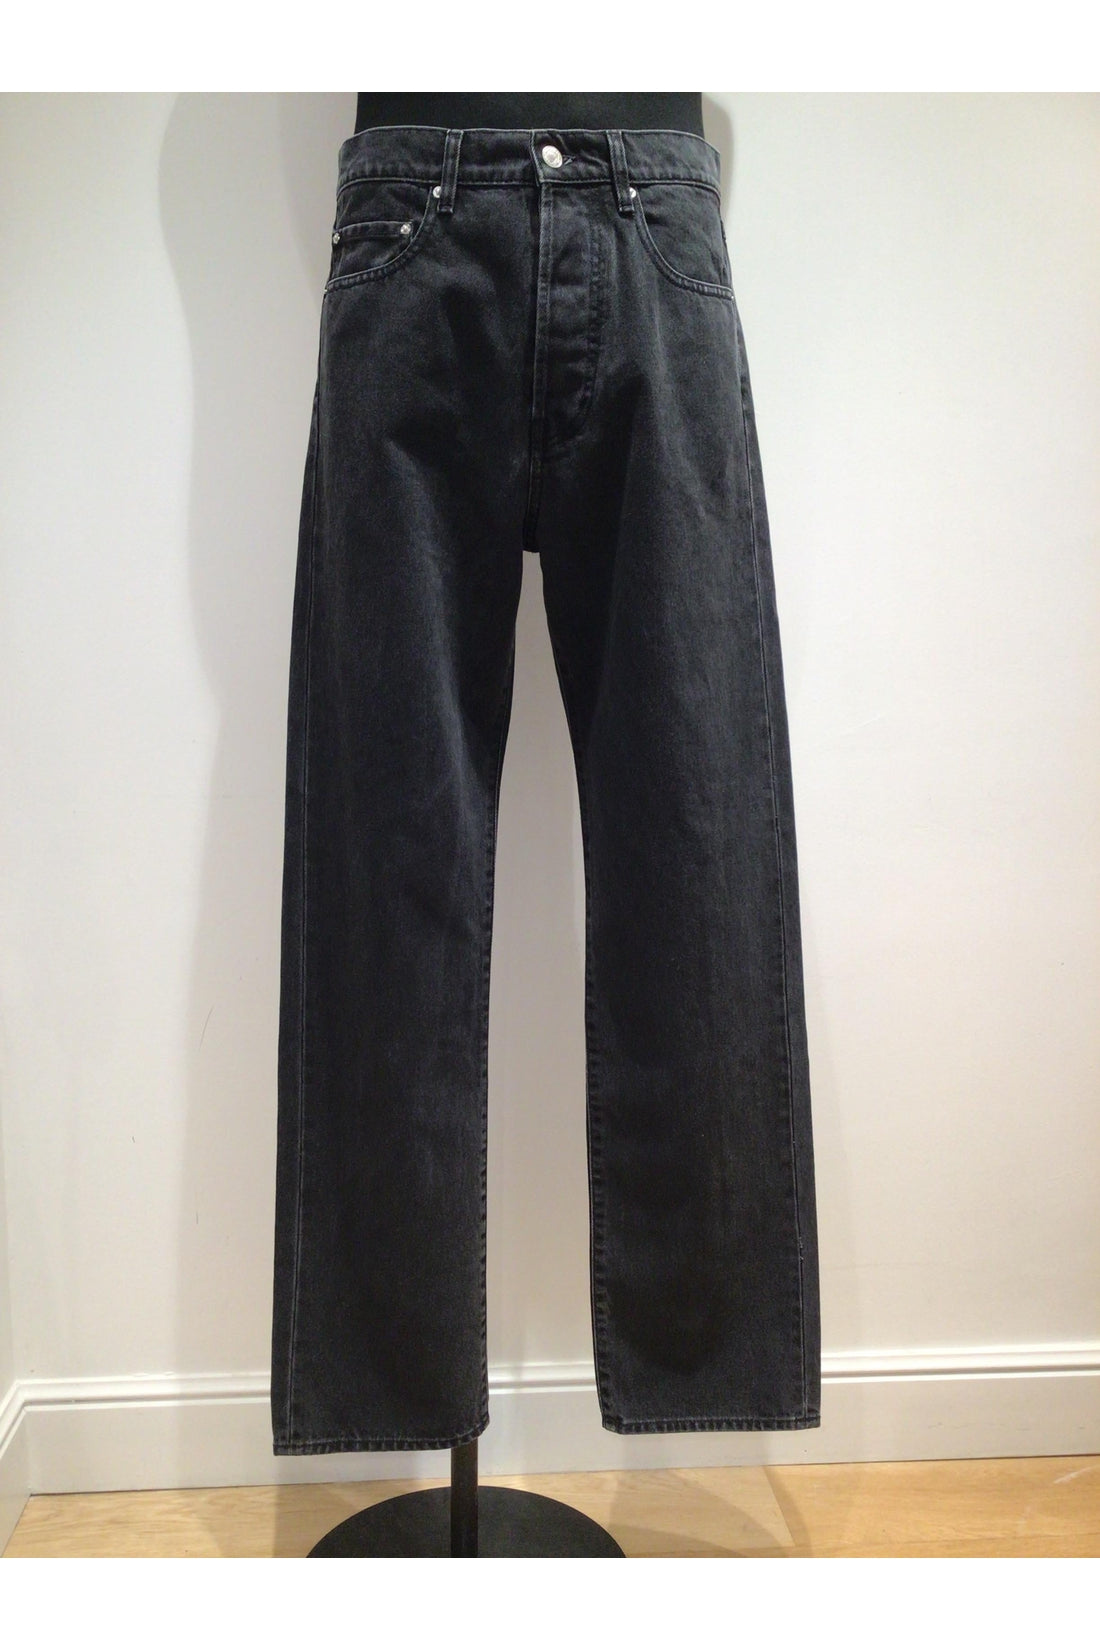 Kenzo-OUTLET-SALE-Asagao straight leg jeans-ARCHIVIST